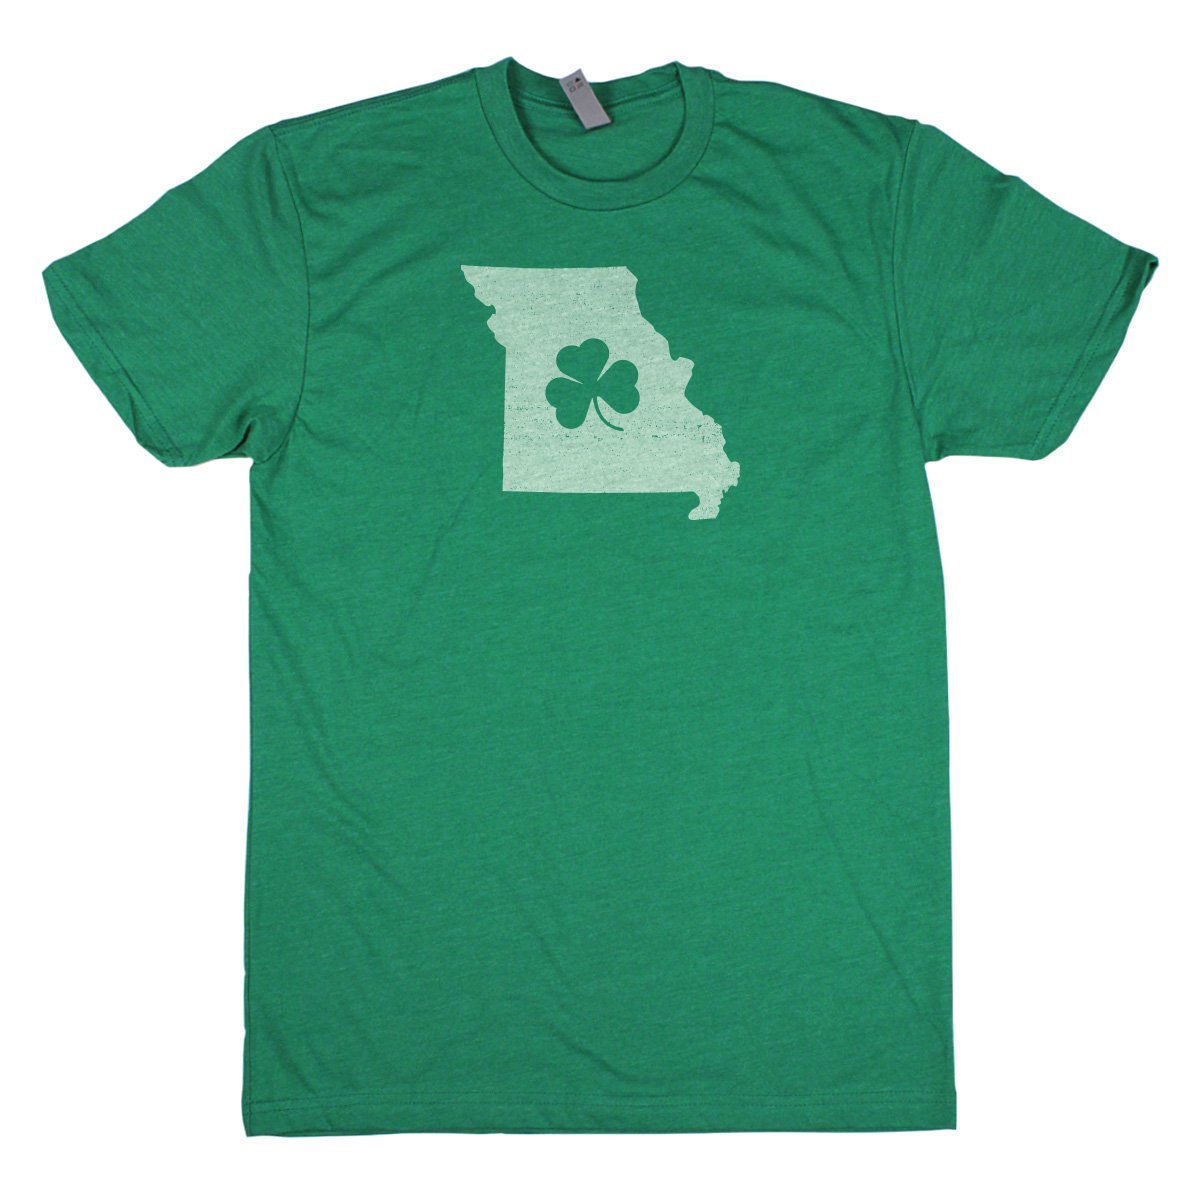 Shamrock Men's Unisex T-Shirt - Wisconsin